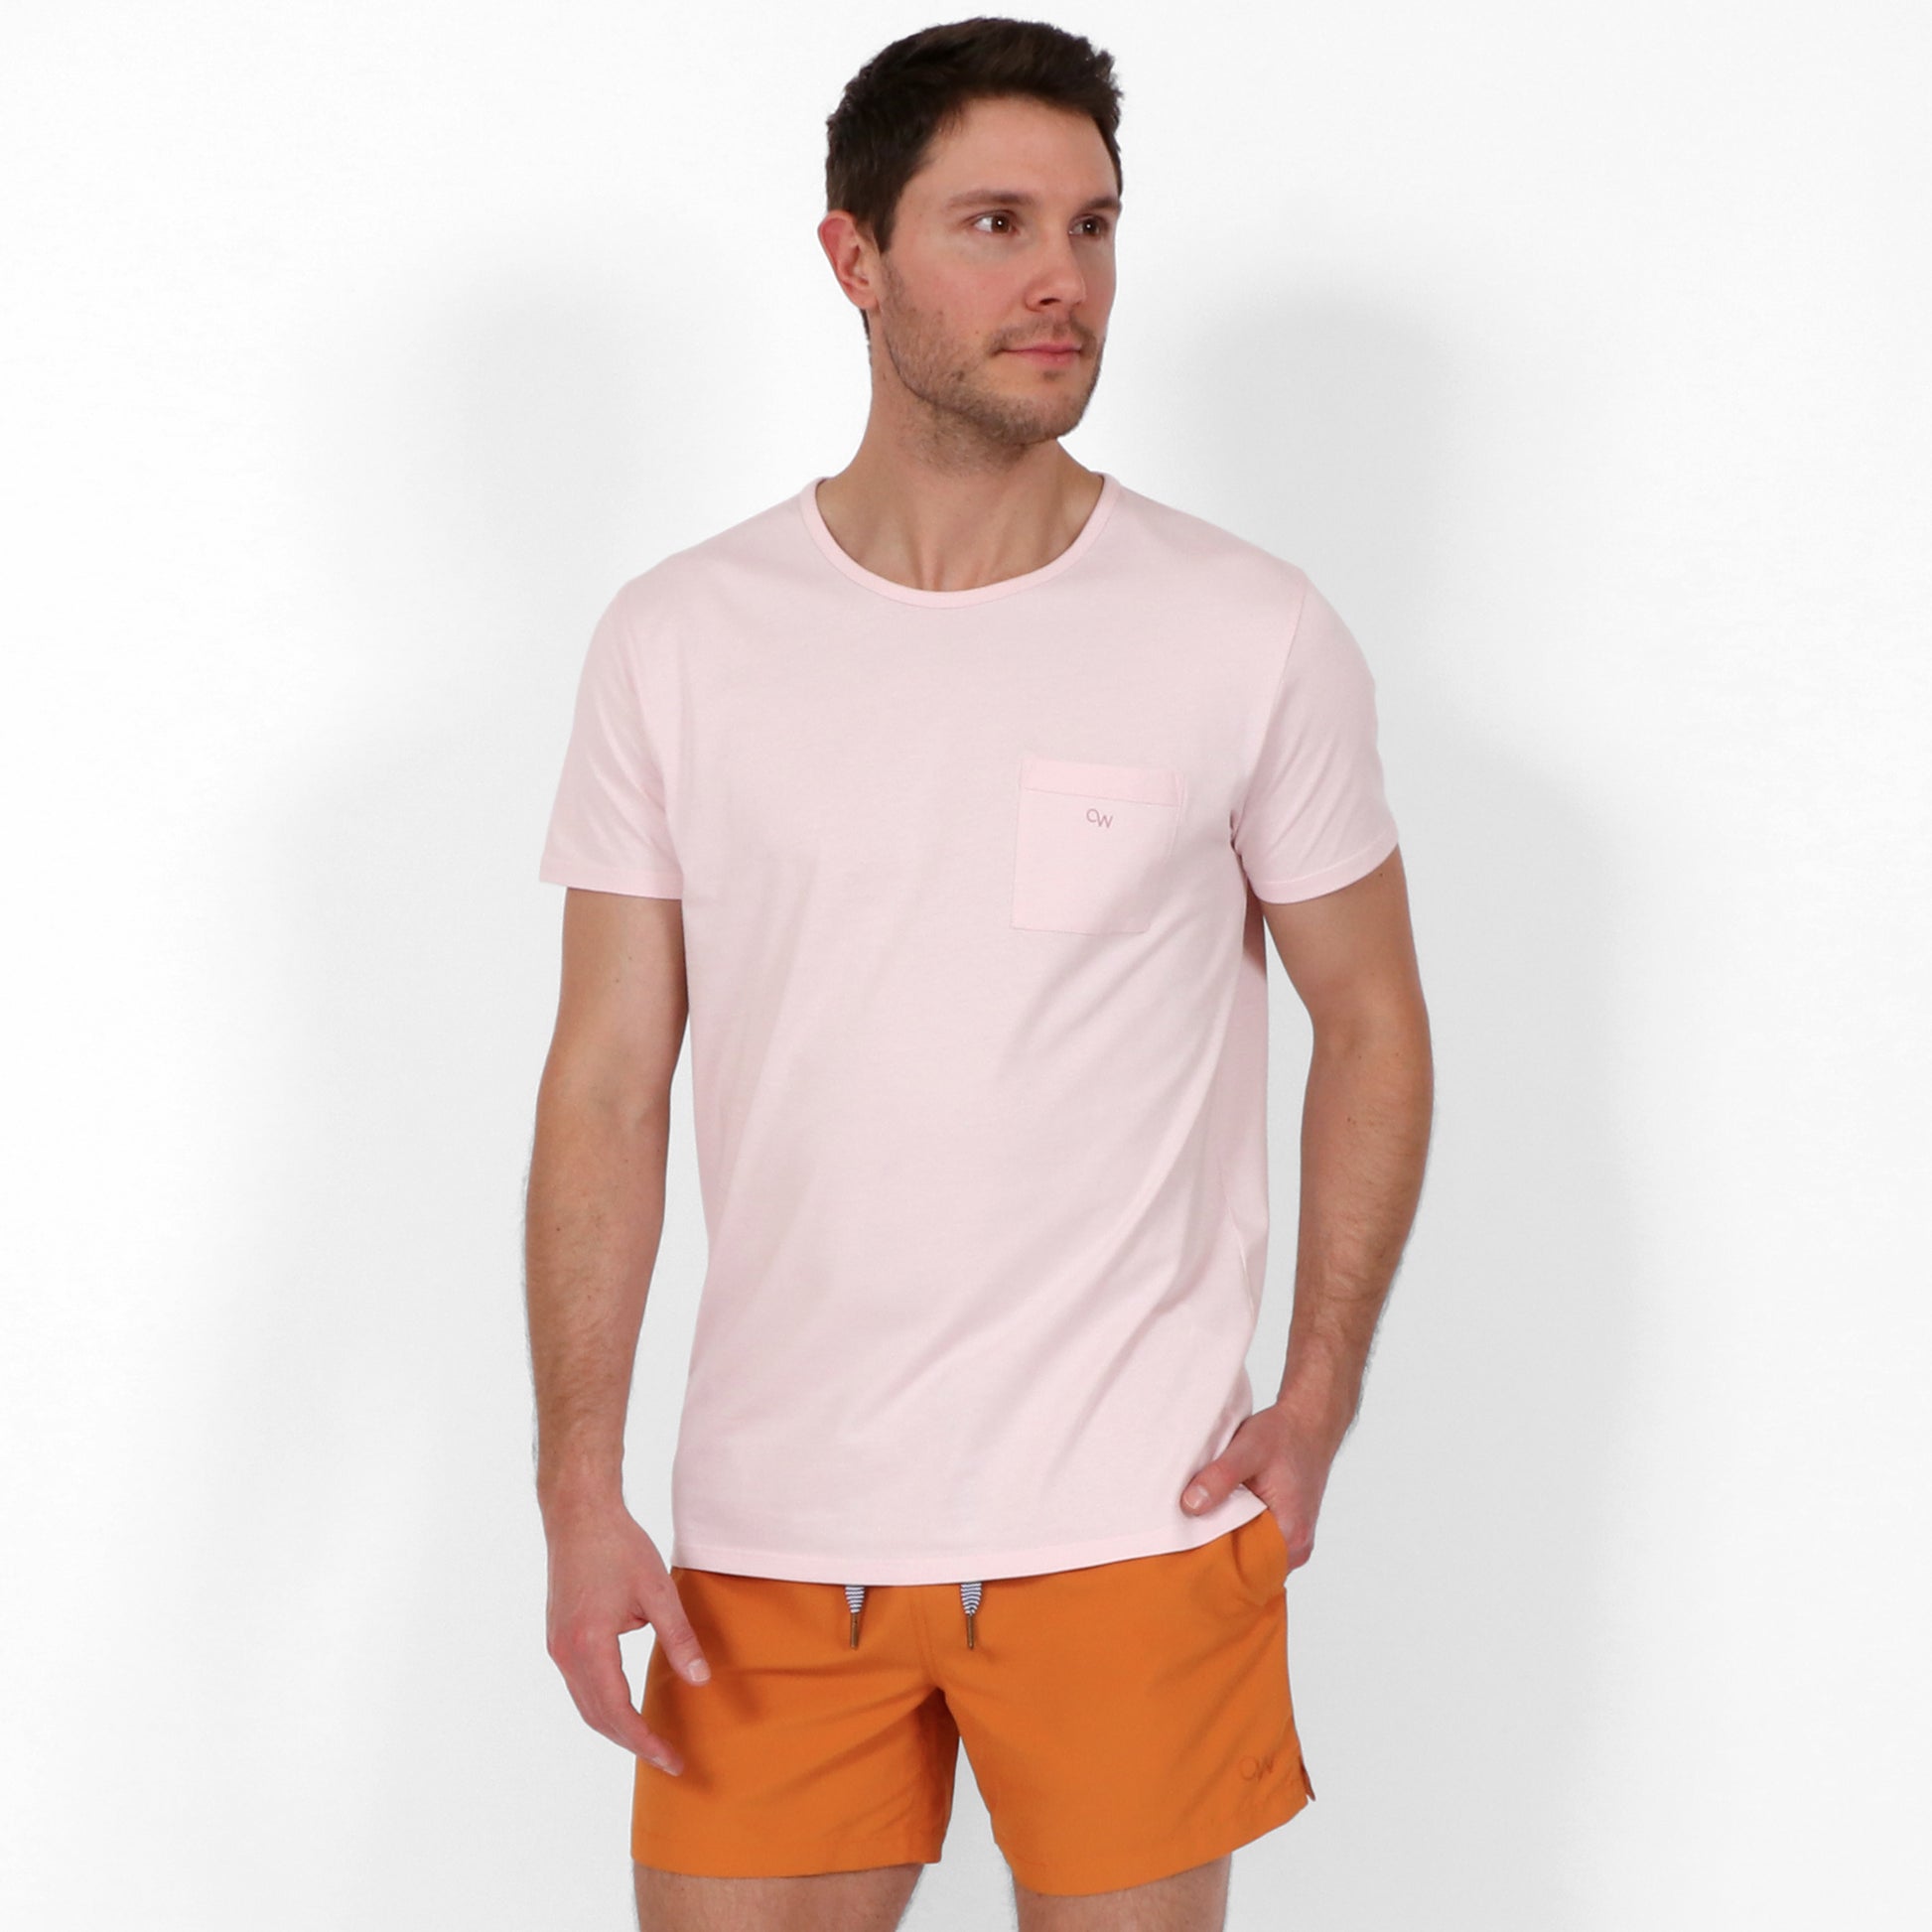 Original Weekend Organic Cotton Men's Pocket T-Shirt in Dawn Pink on Body Front View